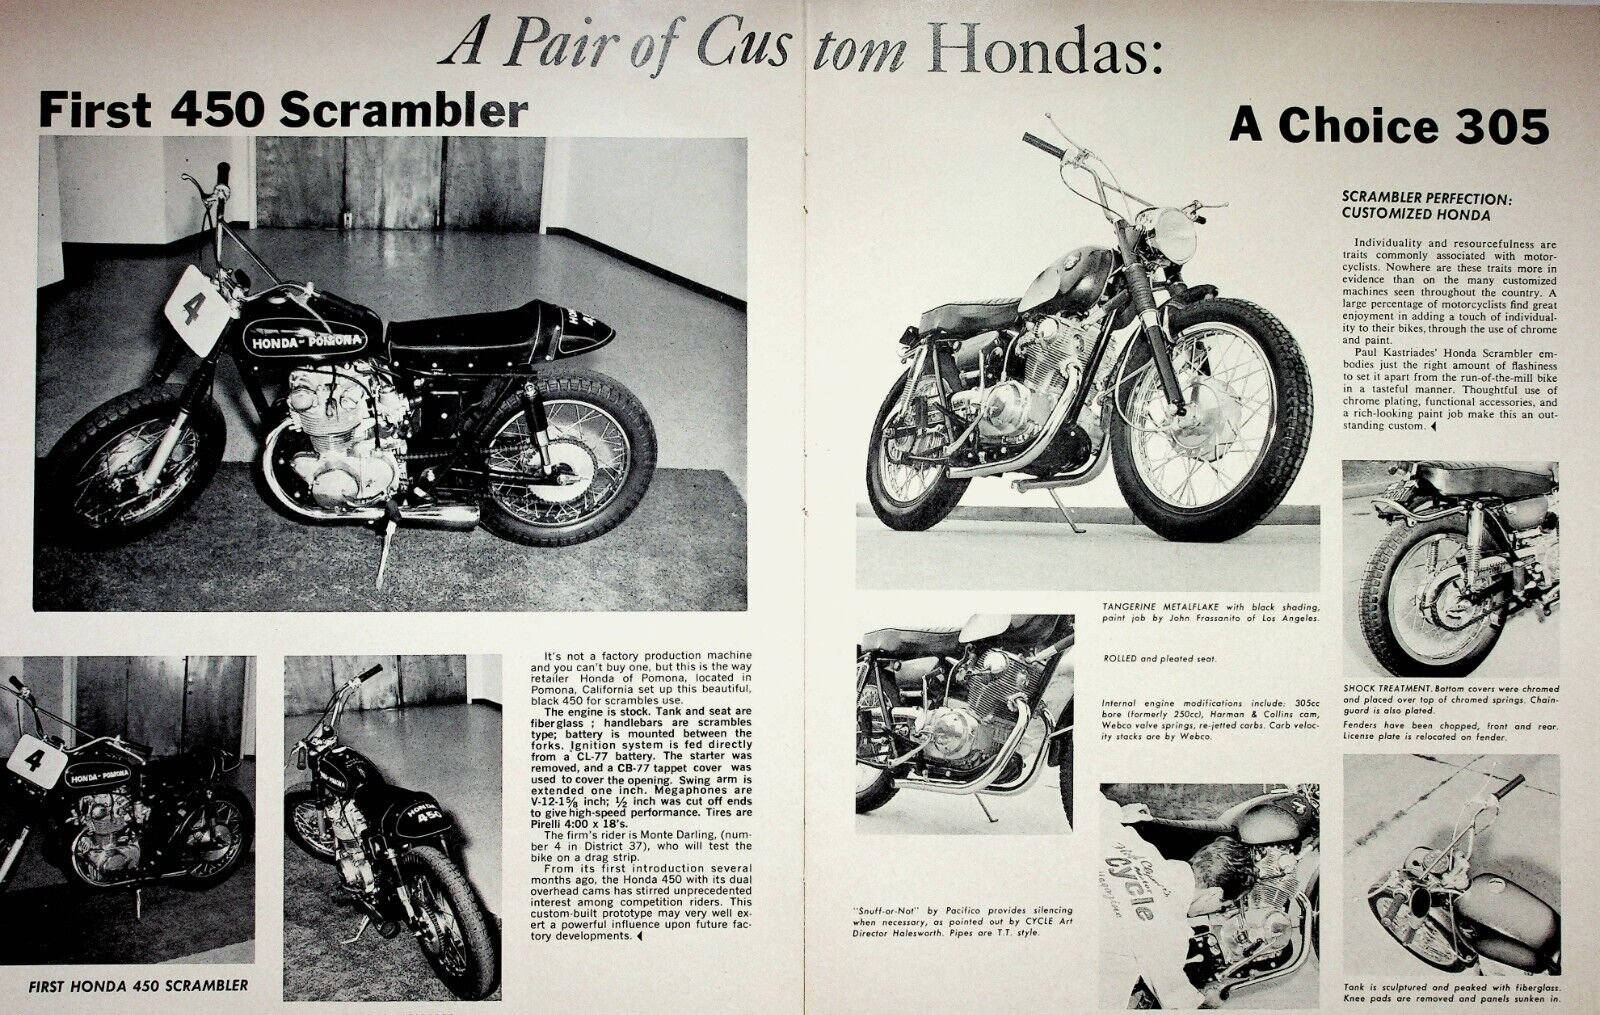 1966 Honda 450 Scrambler 305 Custom Motorcycle - 2-Page Vintage Article